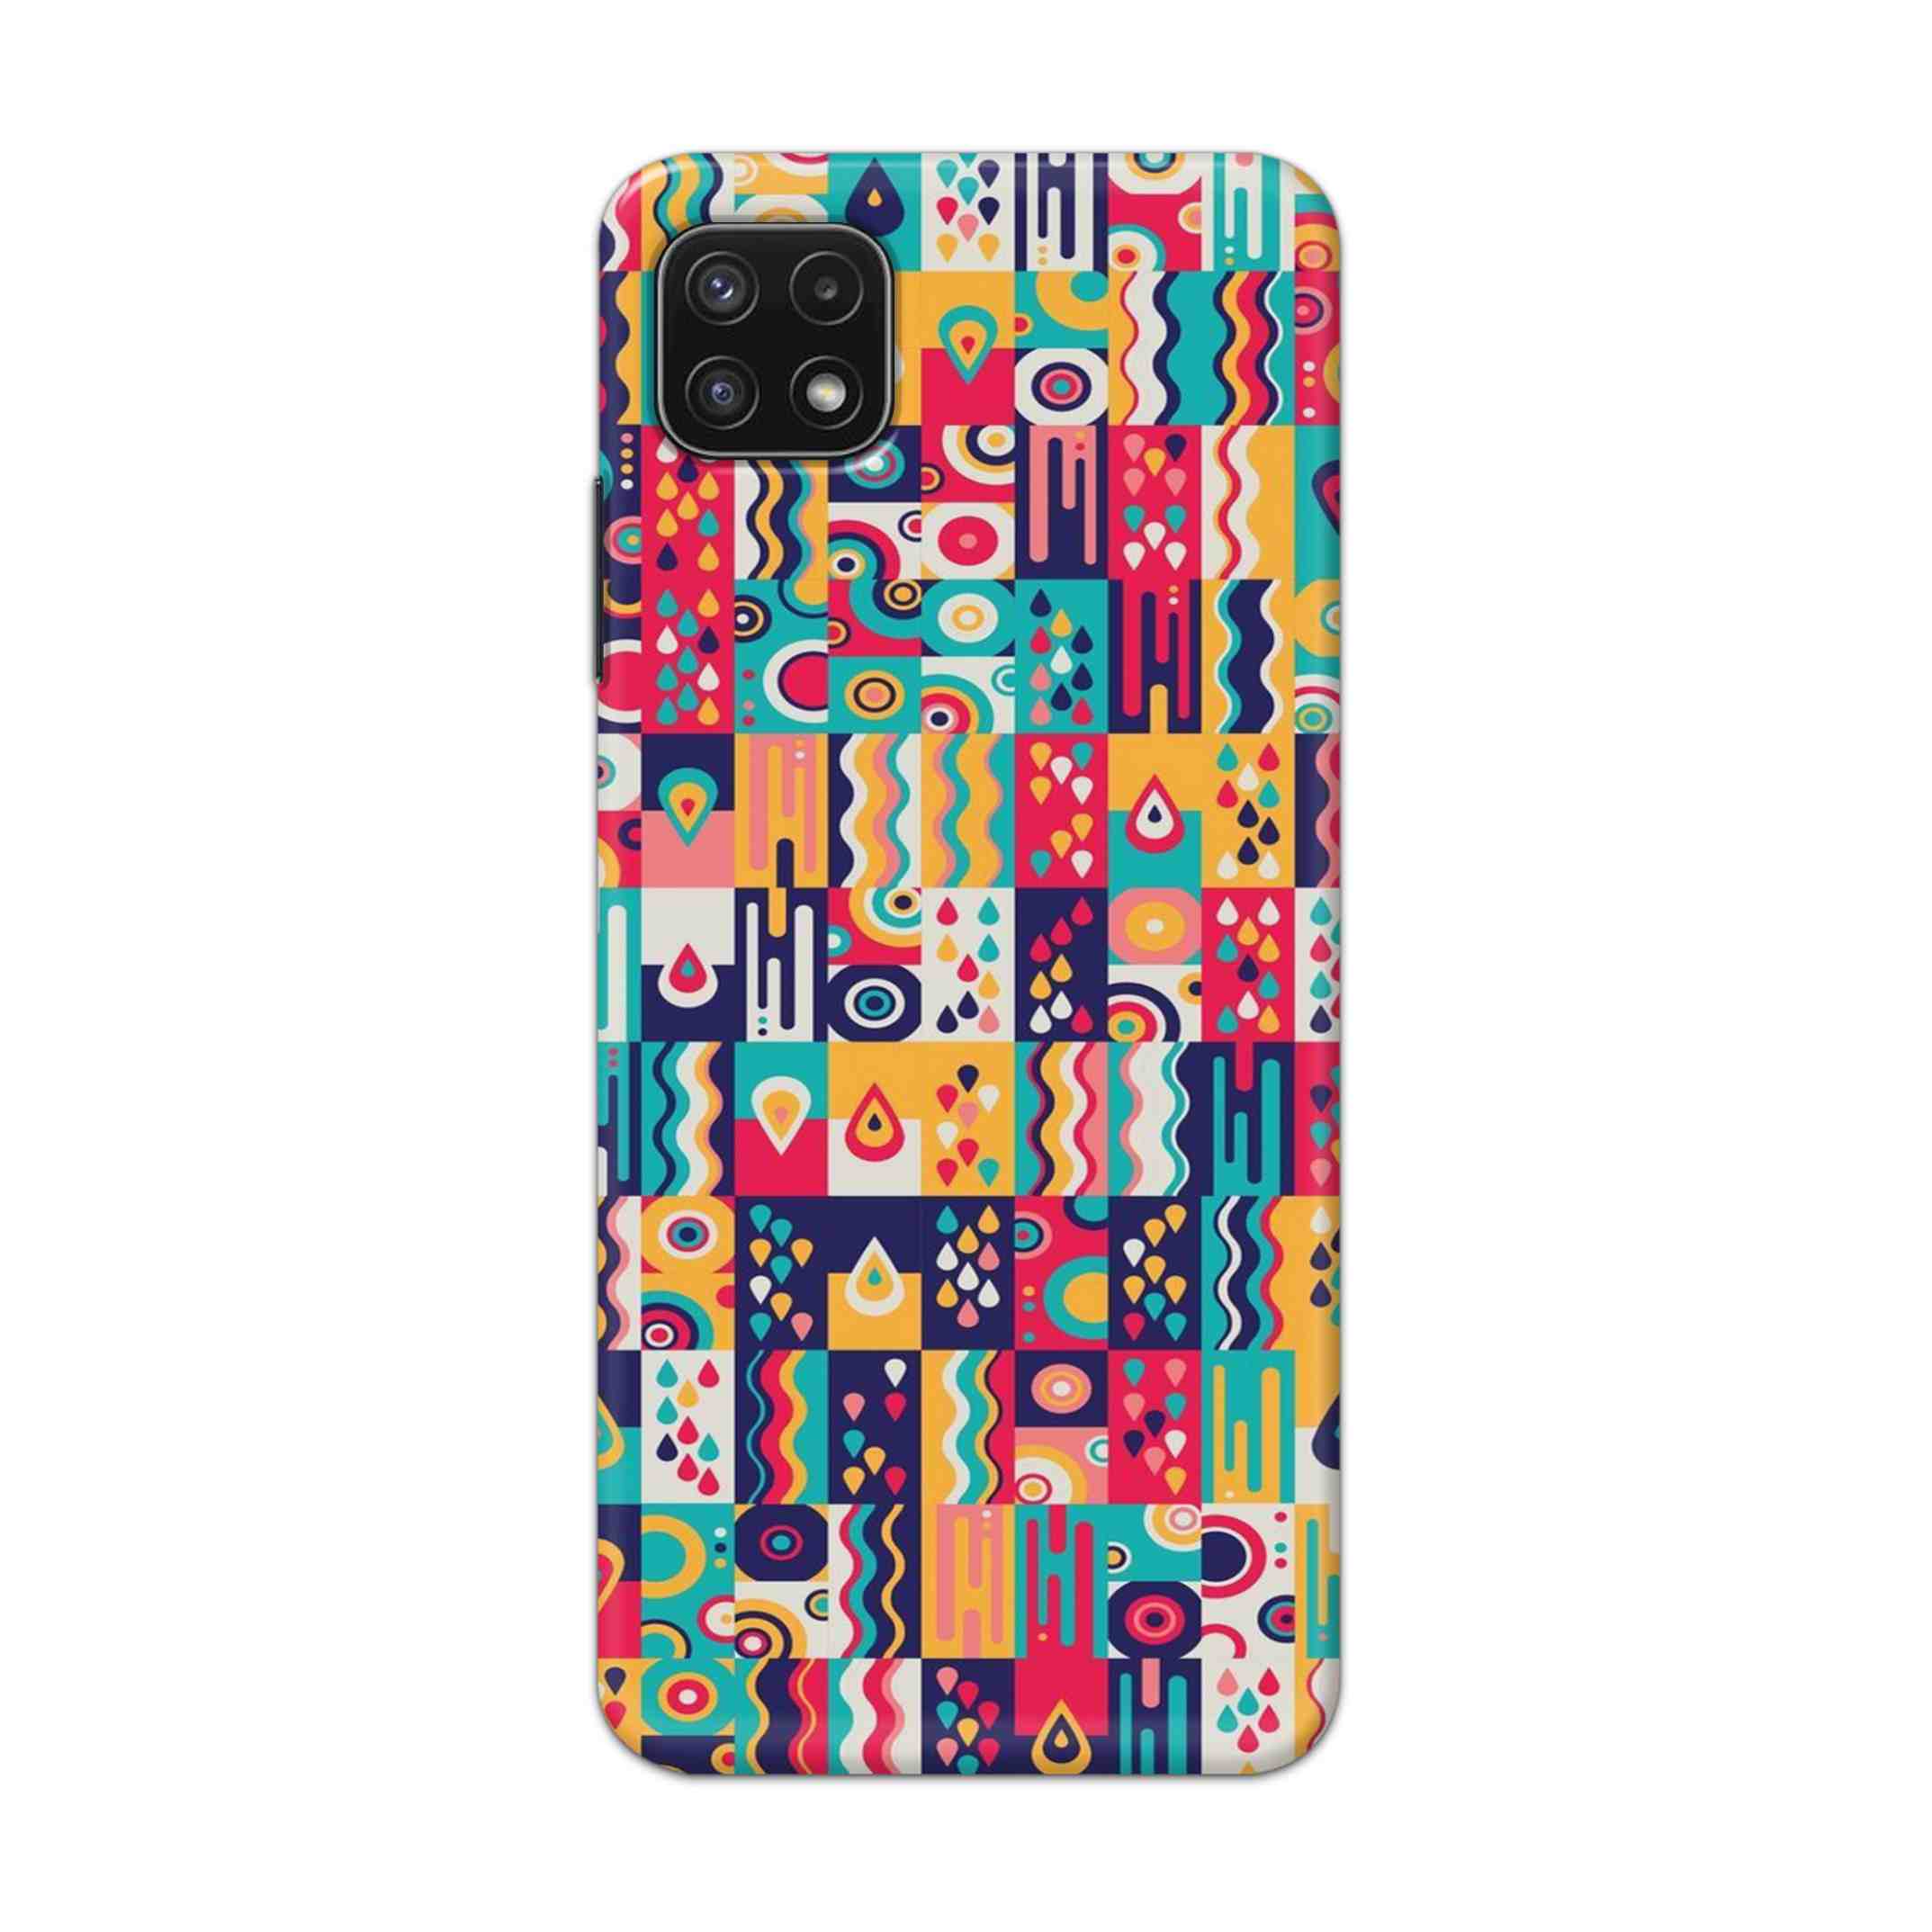 Buy Art Hard Back Mobile Phone Case Cover For Samsung A22 5G Online